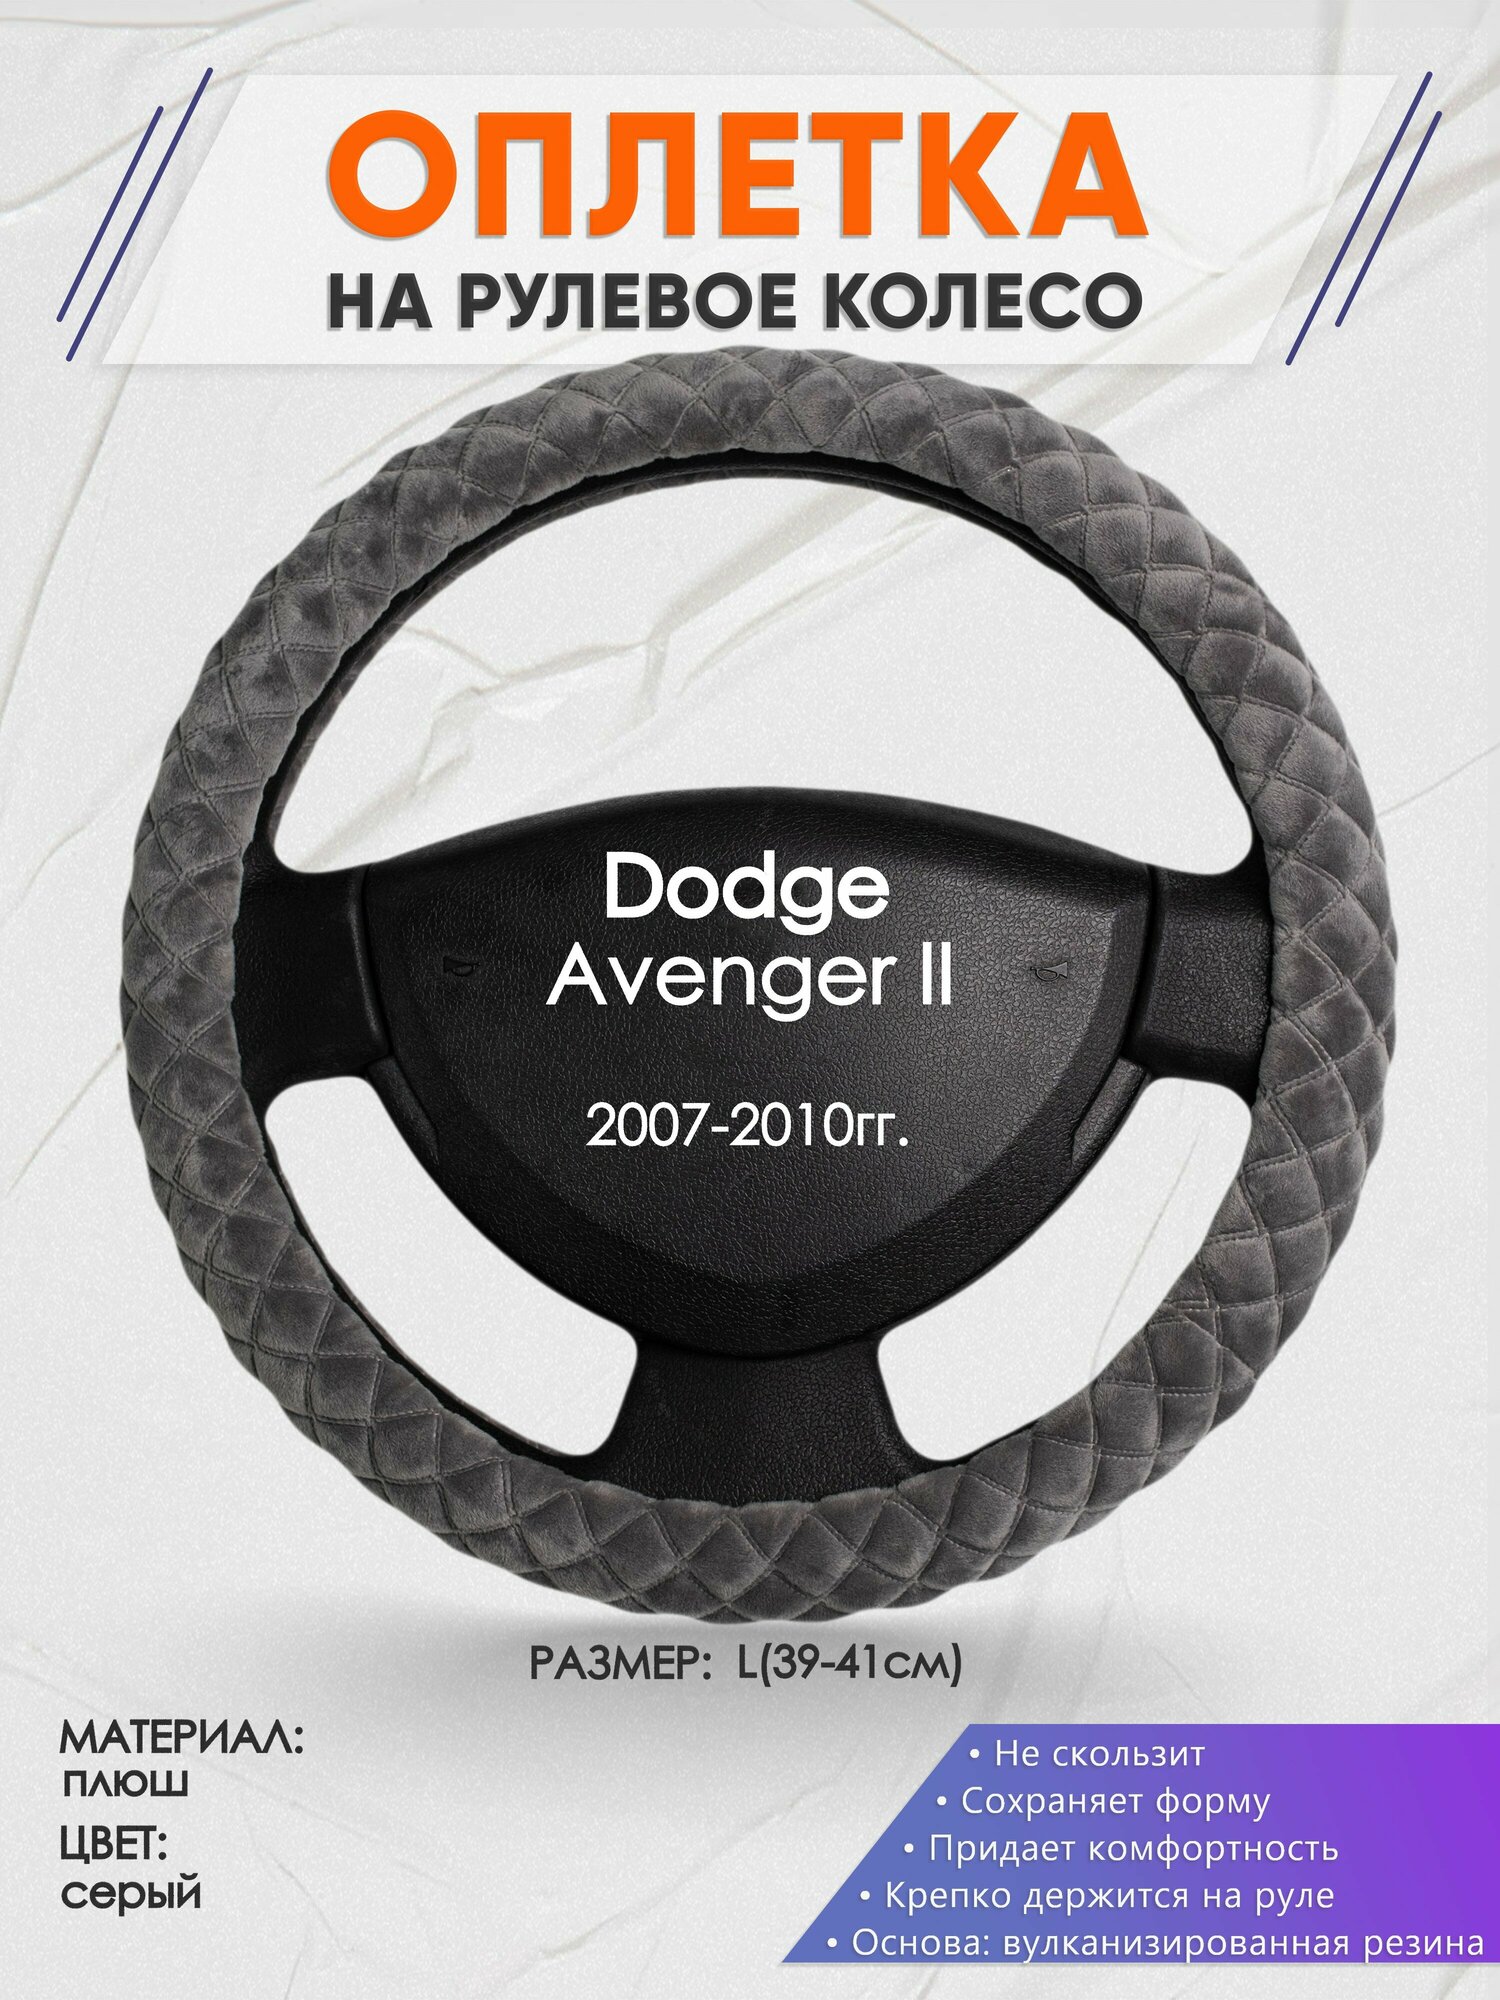 Оплетка на руль для Dodge Avenger 2(Додж Авенджер) 2007-2010, L(39-41см), Замша 35